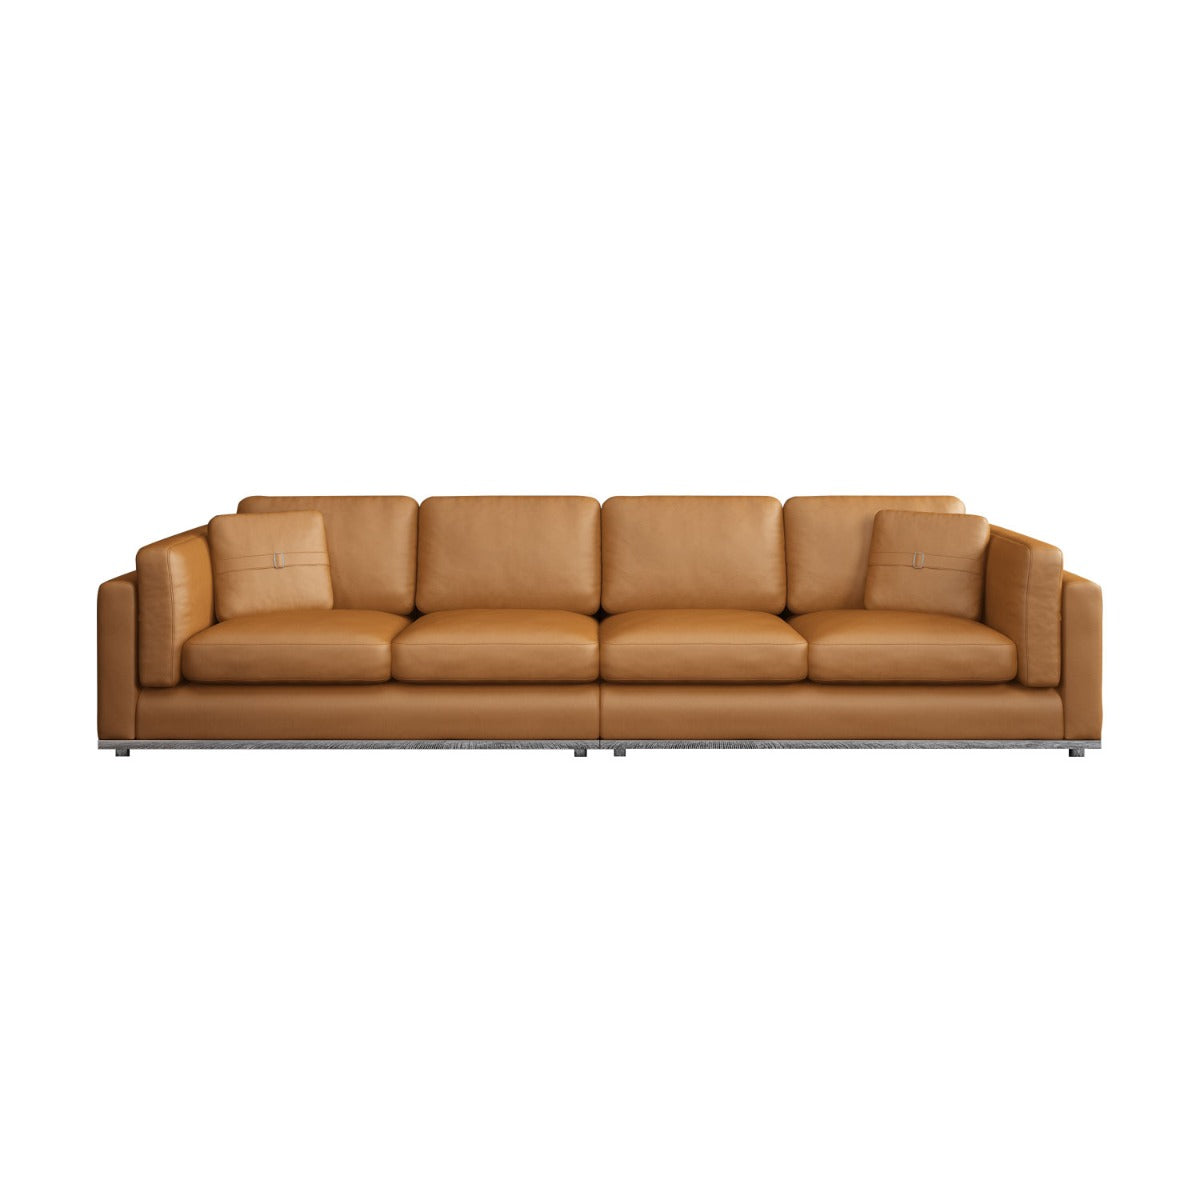 European Furniture - Picasso Oversize Sofa in Cognac - 25552-4S - New Star Living